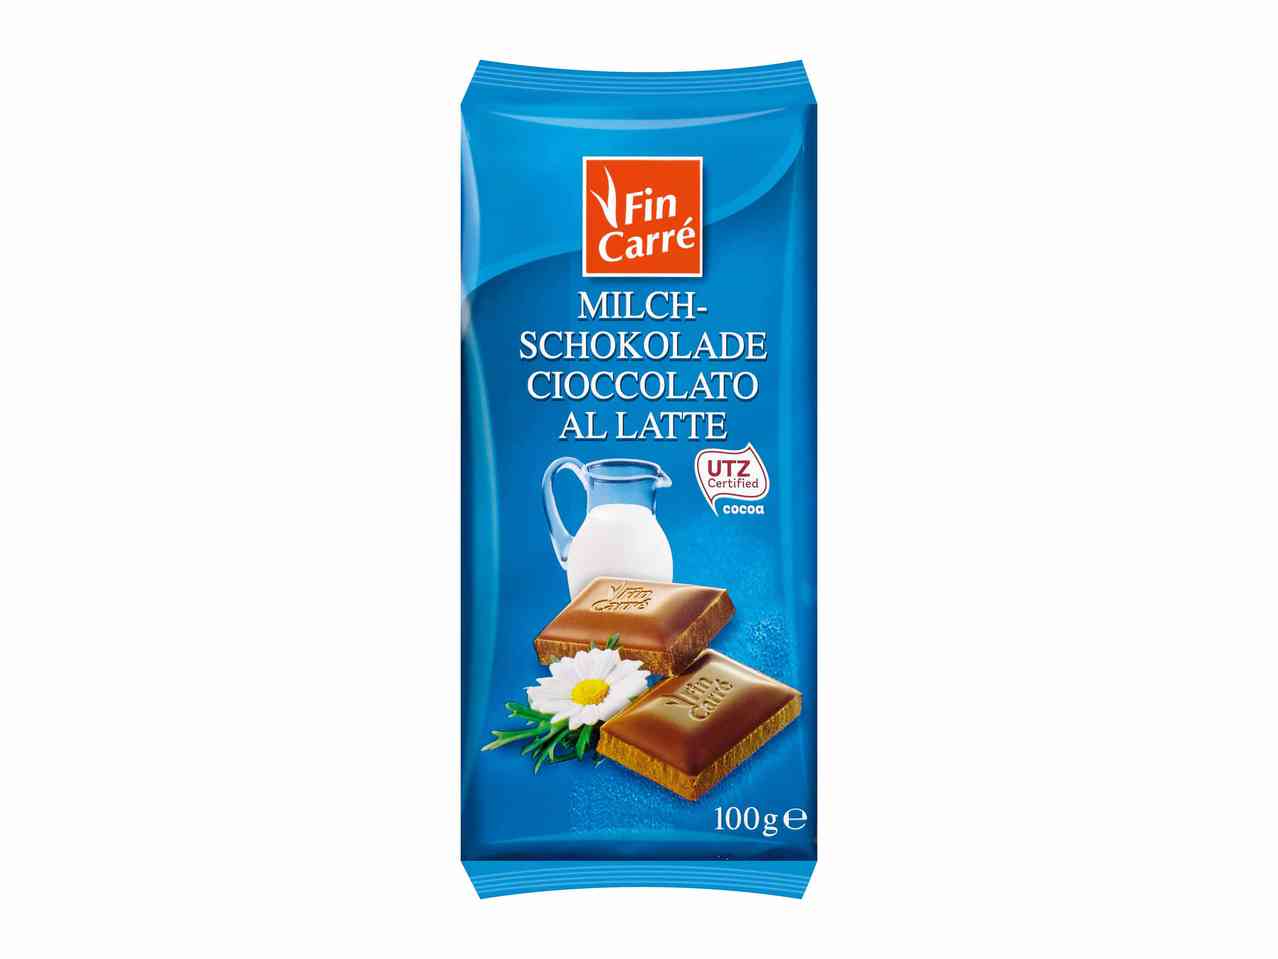 Milch-Schokolade